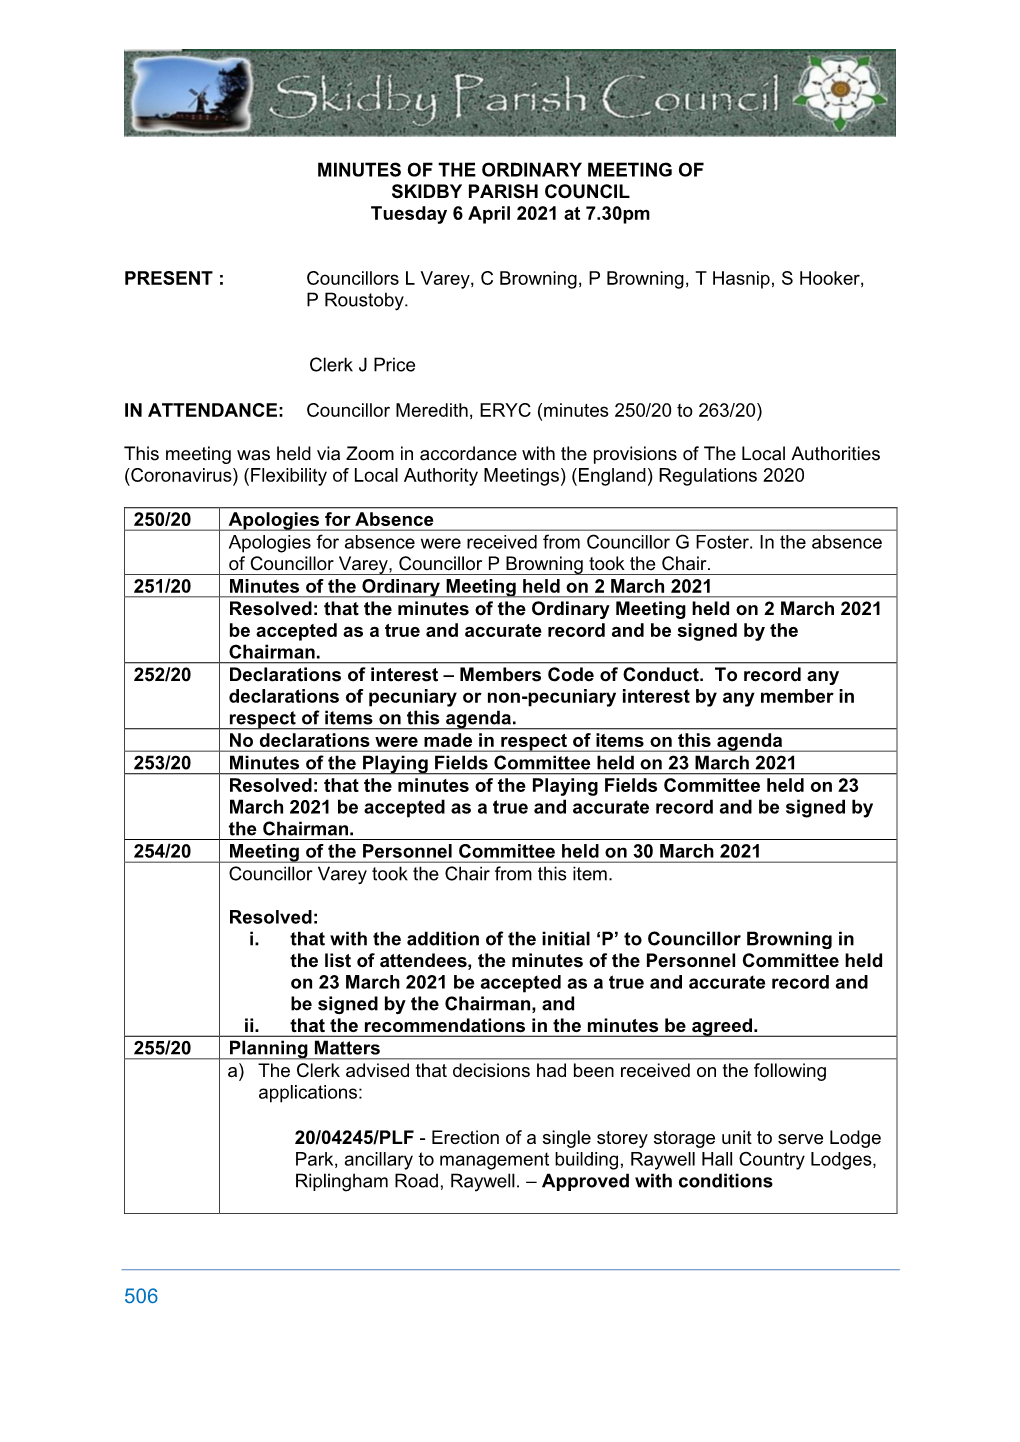 MINUTES of the ORDINARY MEETING of SKIDBY PARISH COUNCIL Tuesday 6 April 2021 at 7.30Pm